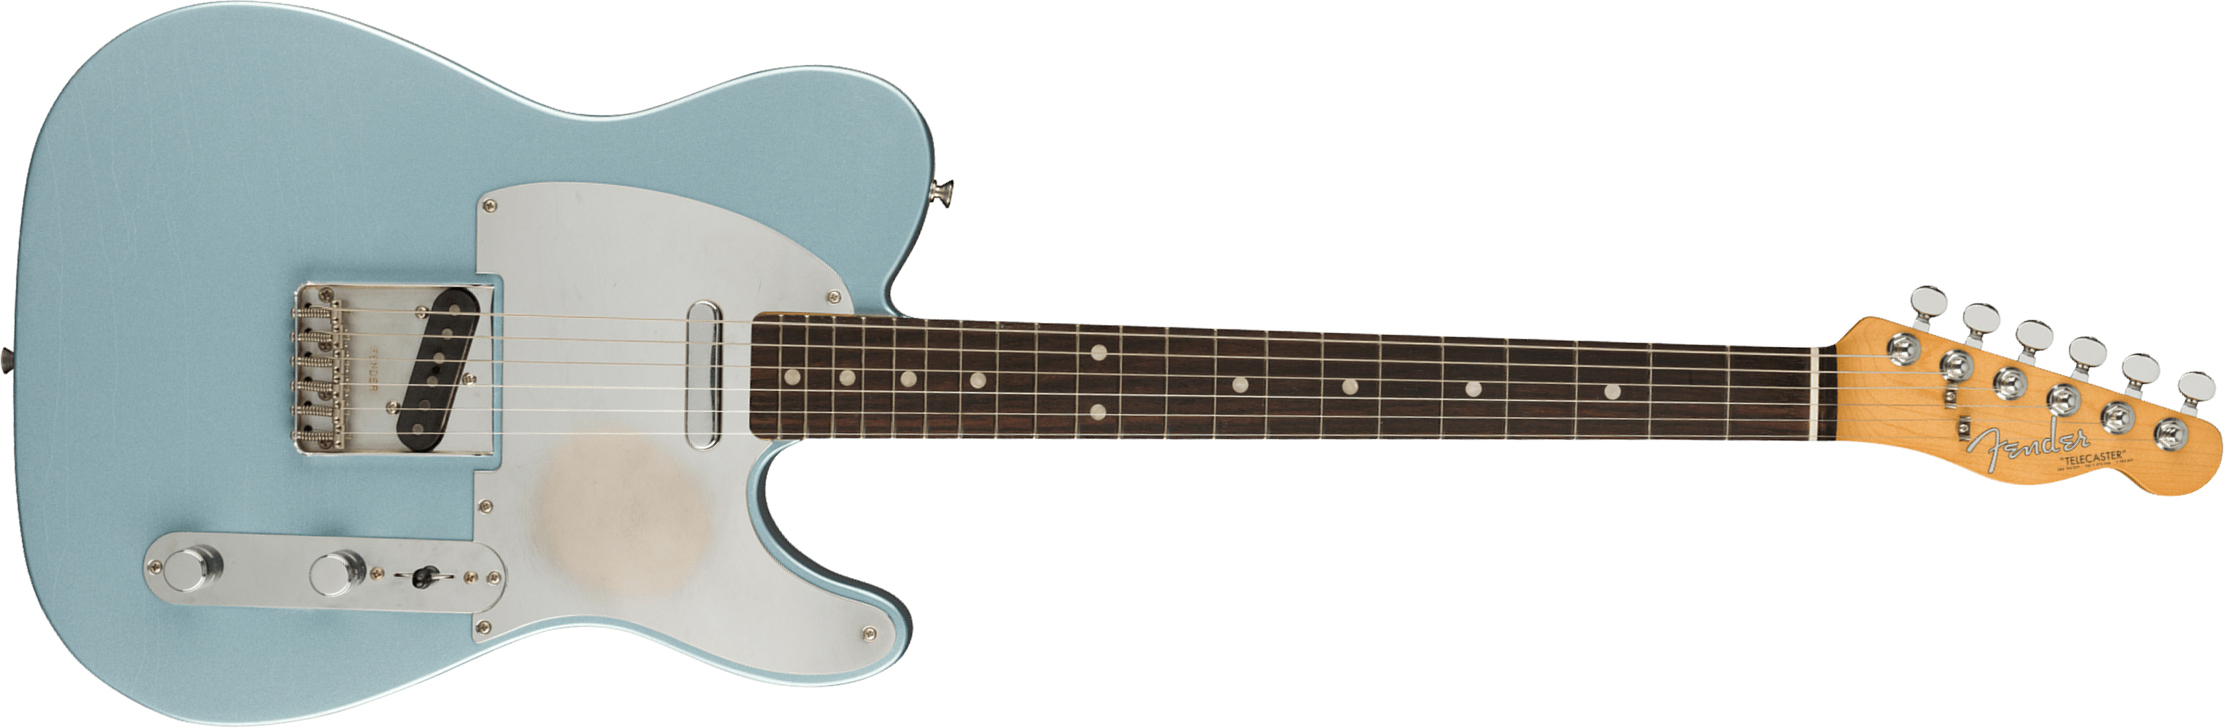 Fender Chrissie Hynde Tele Signature Mex Rw - Road Worn Faded Ice Blue Metallic - Guitarra eléctrica con forma de tel - Main picture